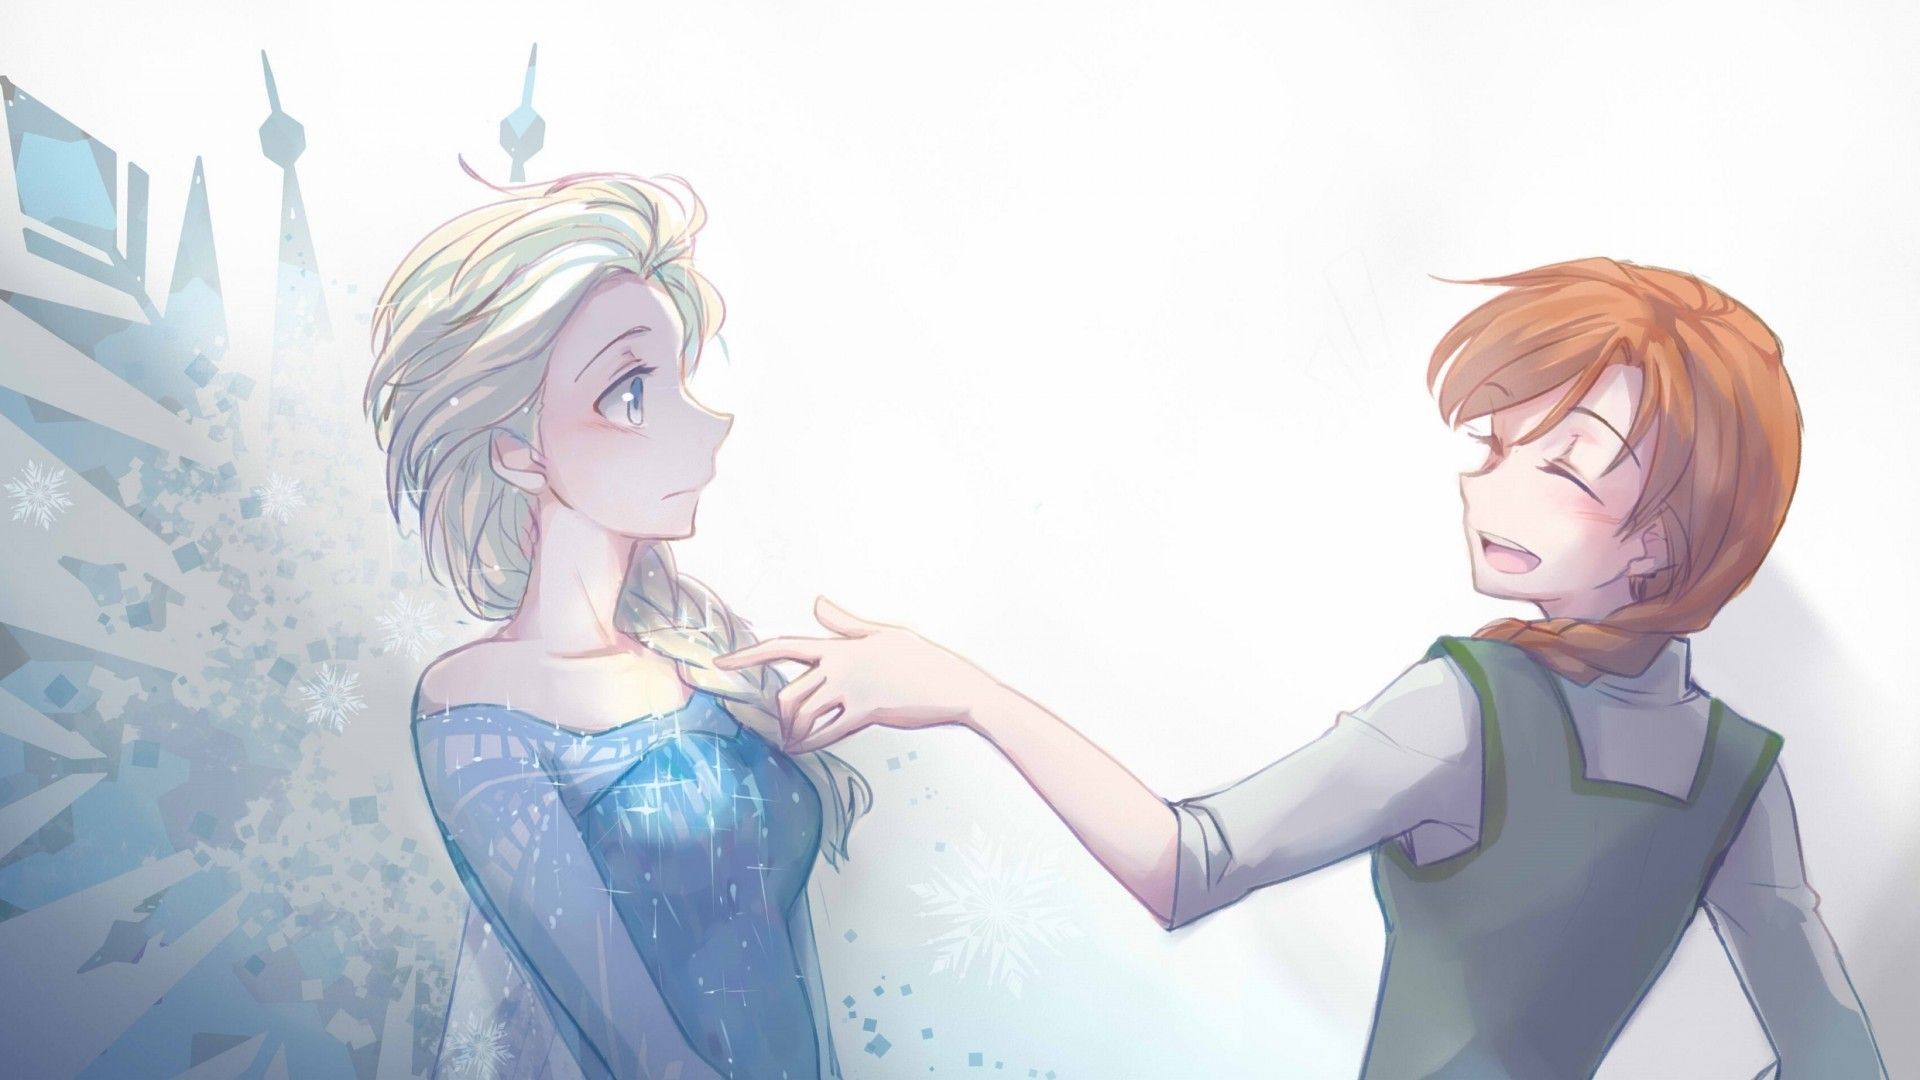 Download 1920x1080 Frozen, Elsa, Anime Style, The Snow Queen Wallpaper for Widescreen